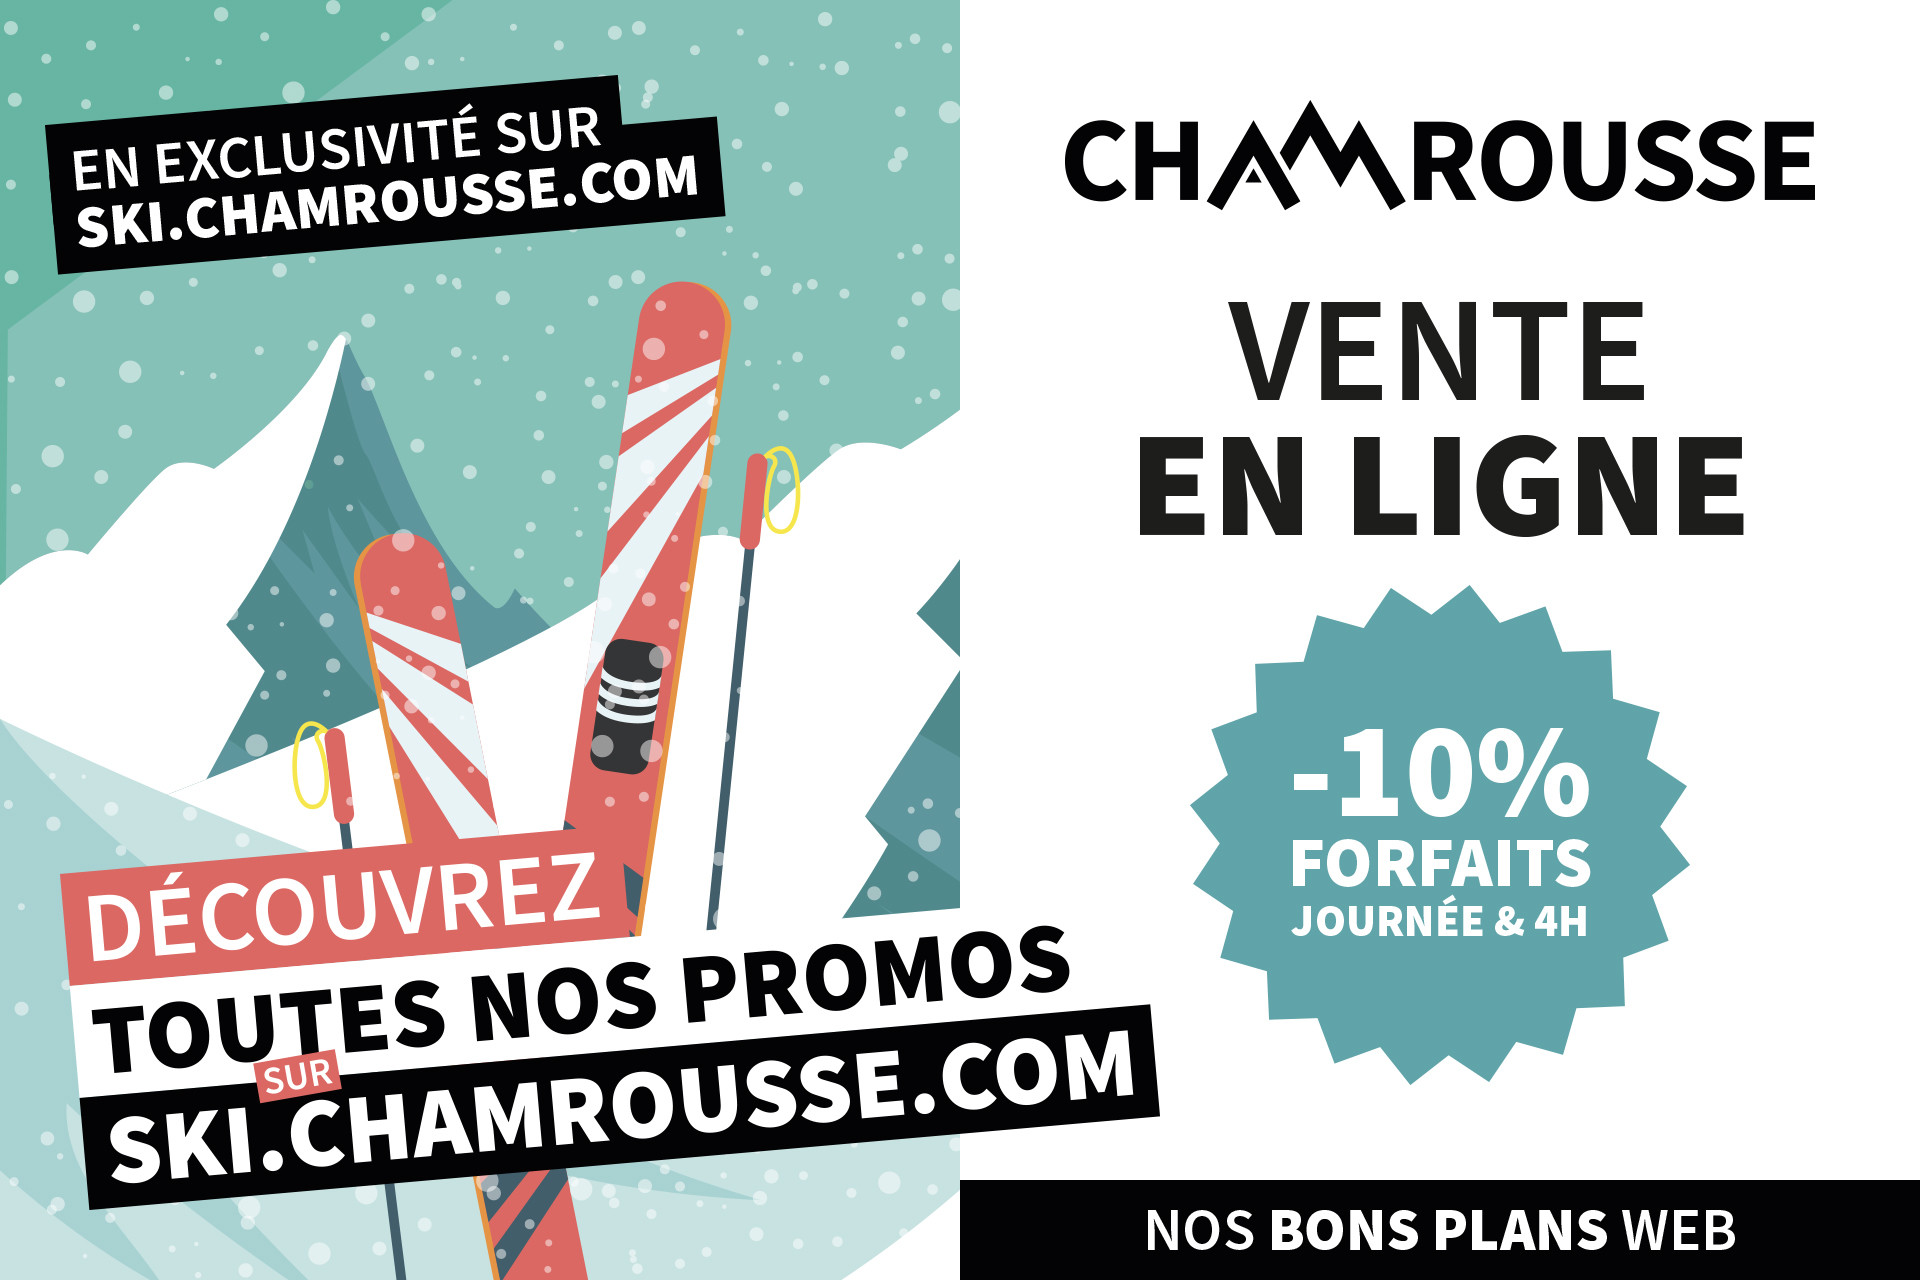 Chamrousse promo web forfait ski achat en ligne hiver station ski montagne grenoble isère alpes france